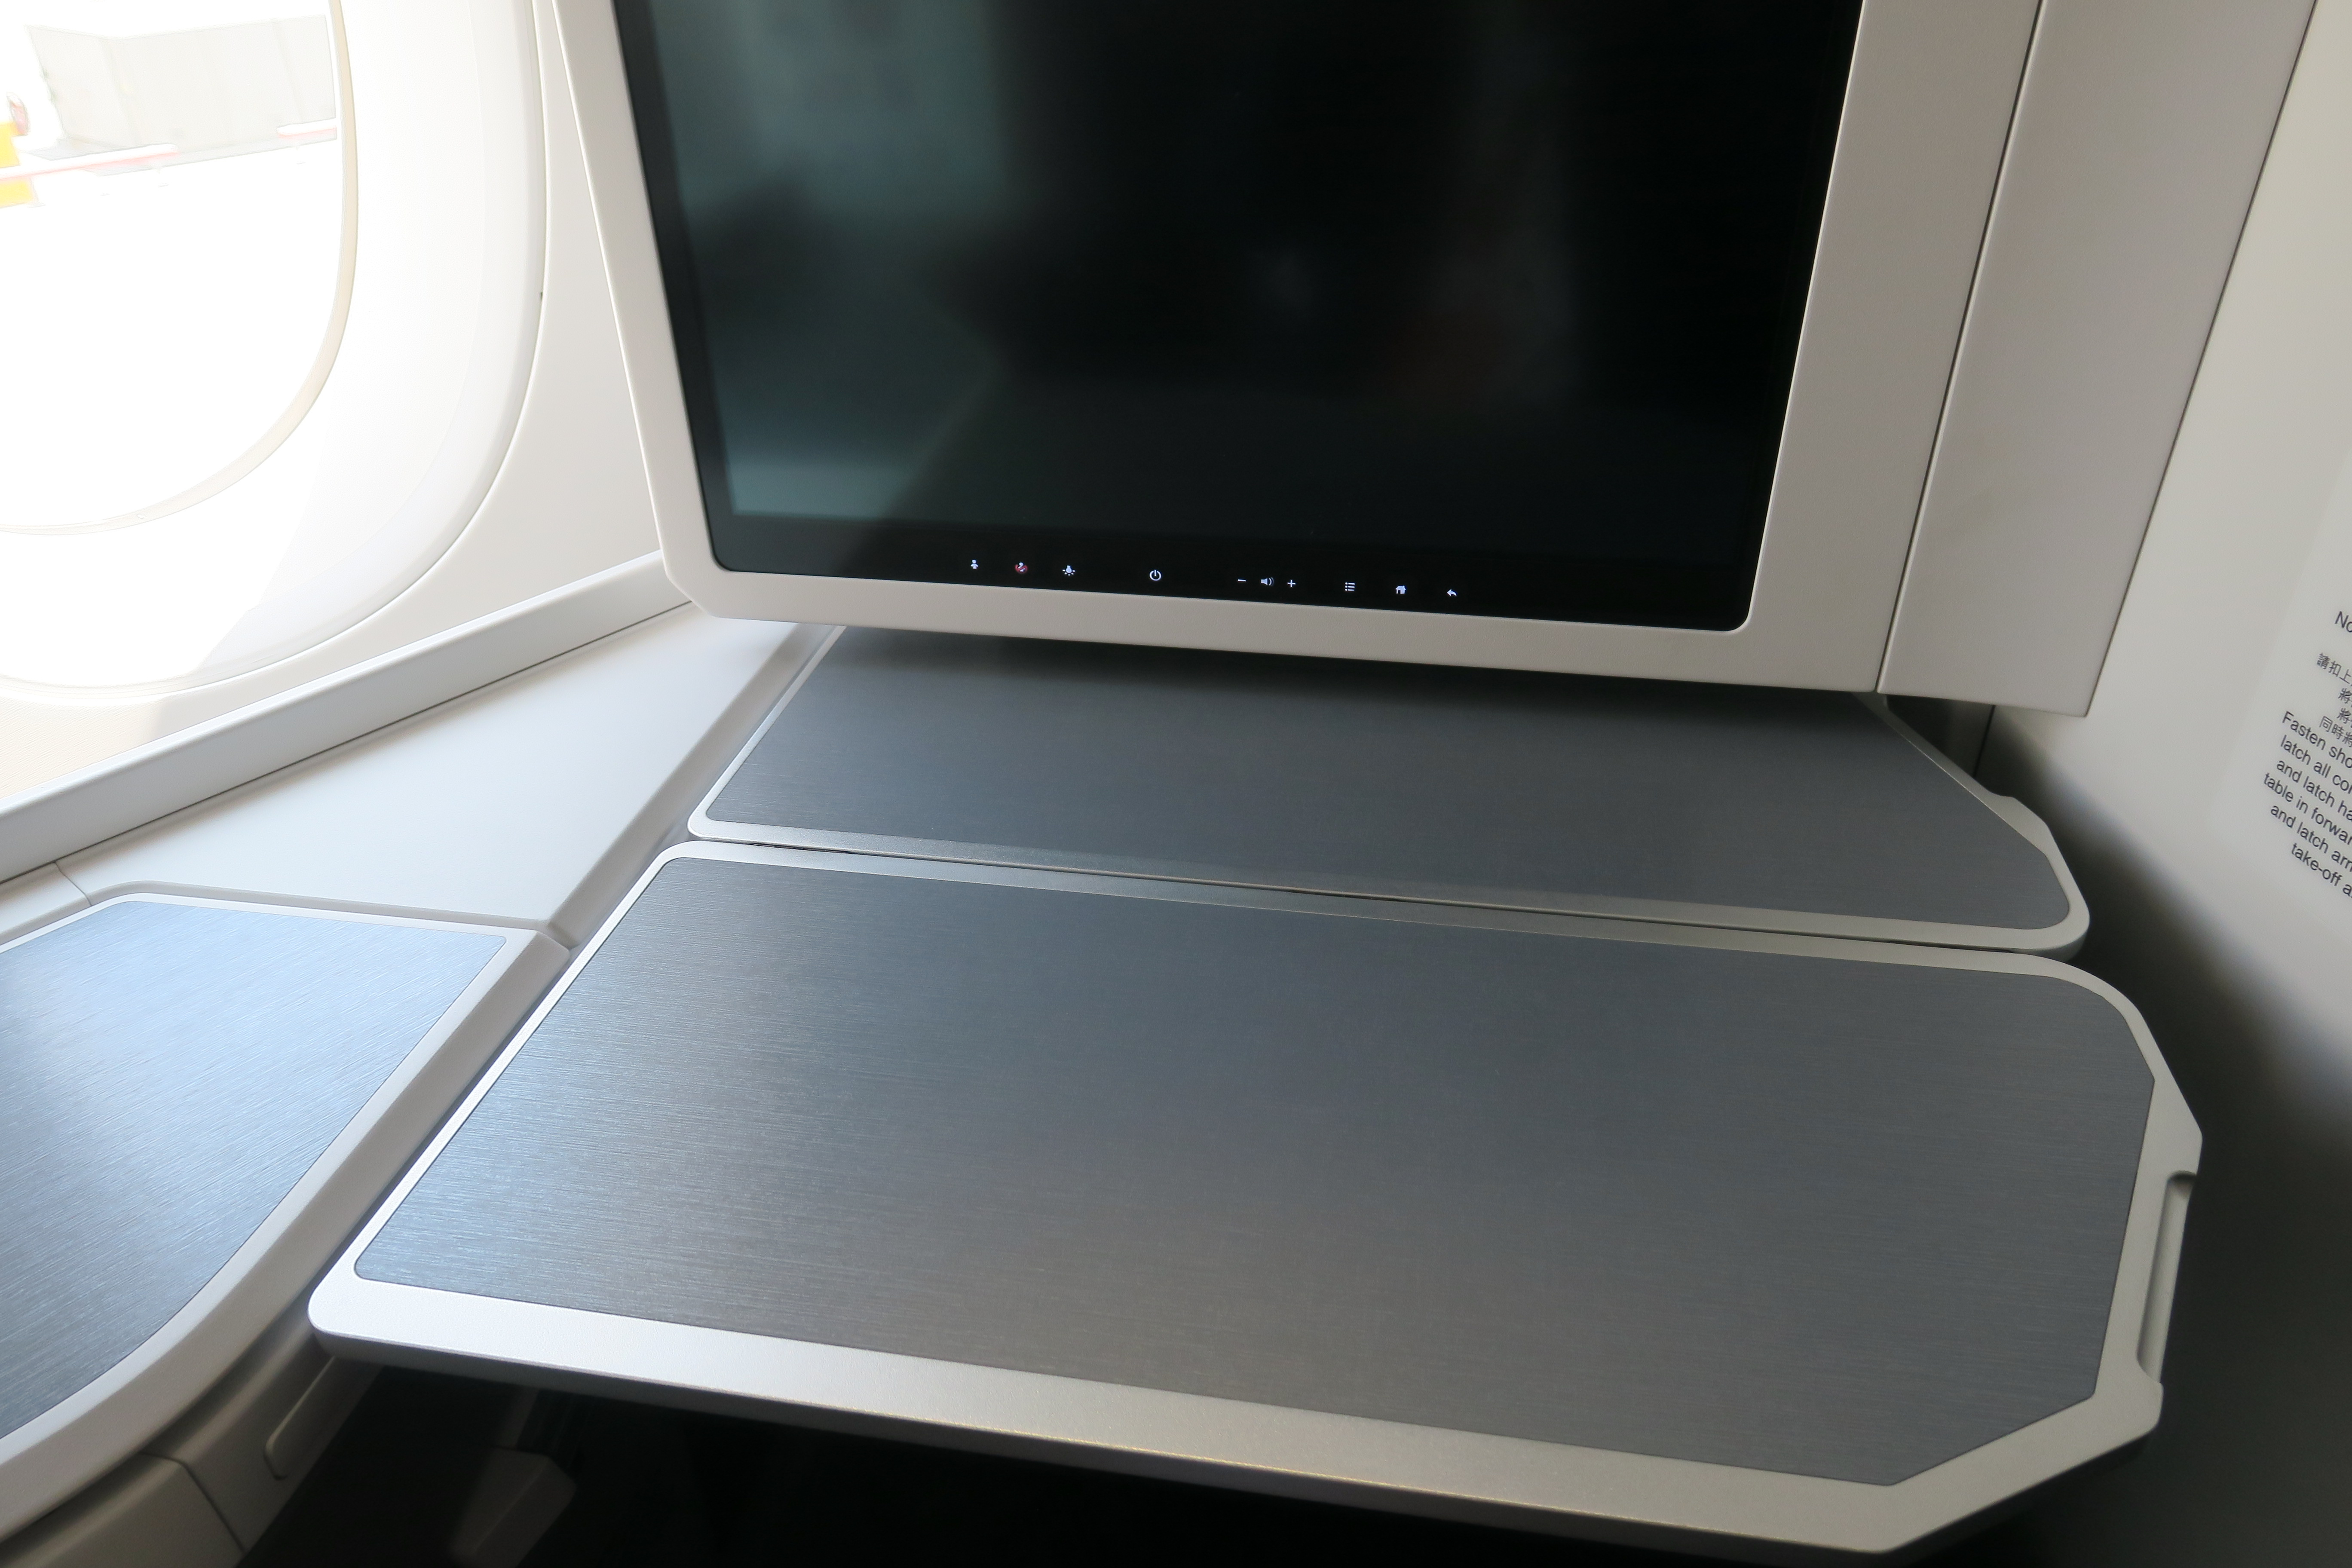 a computer screen on a plane